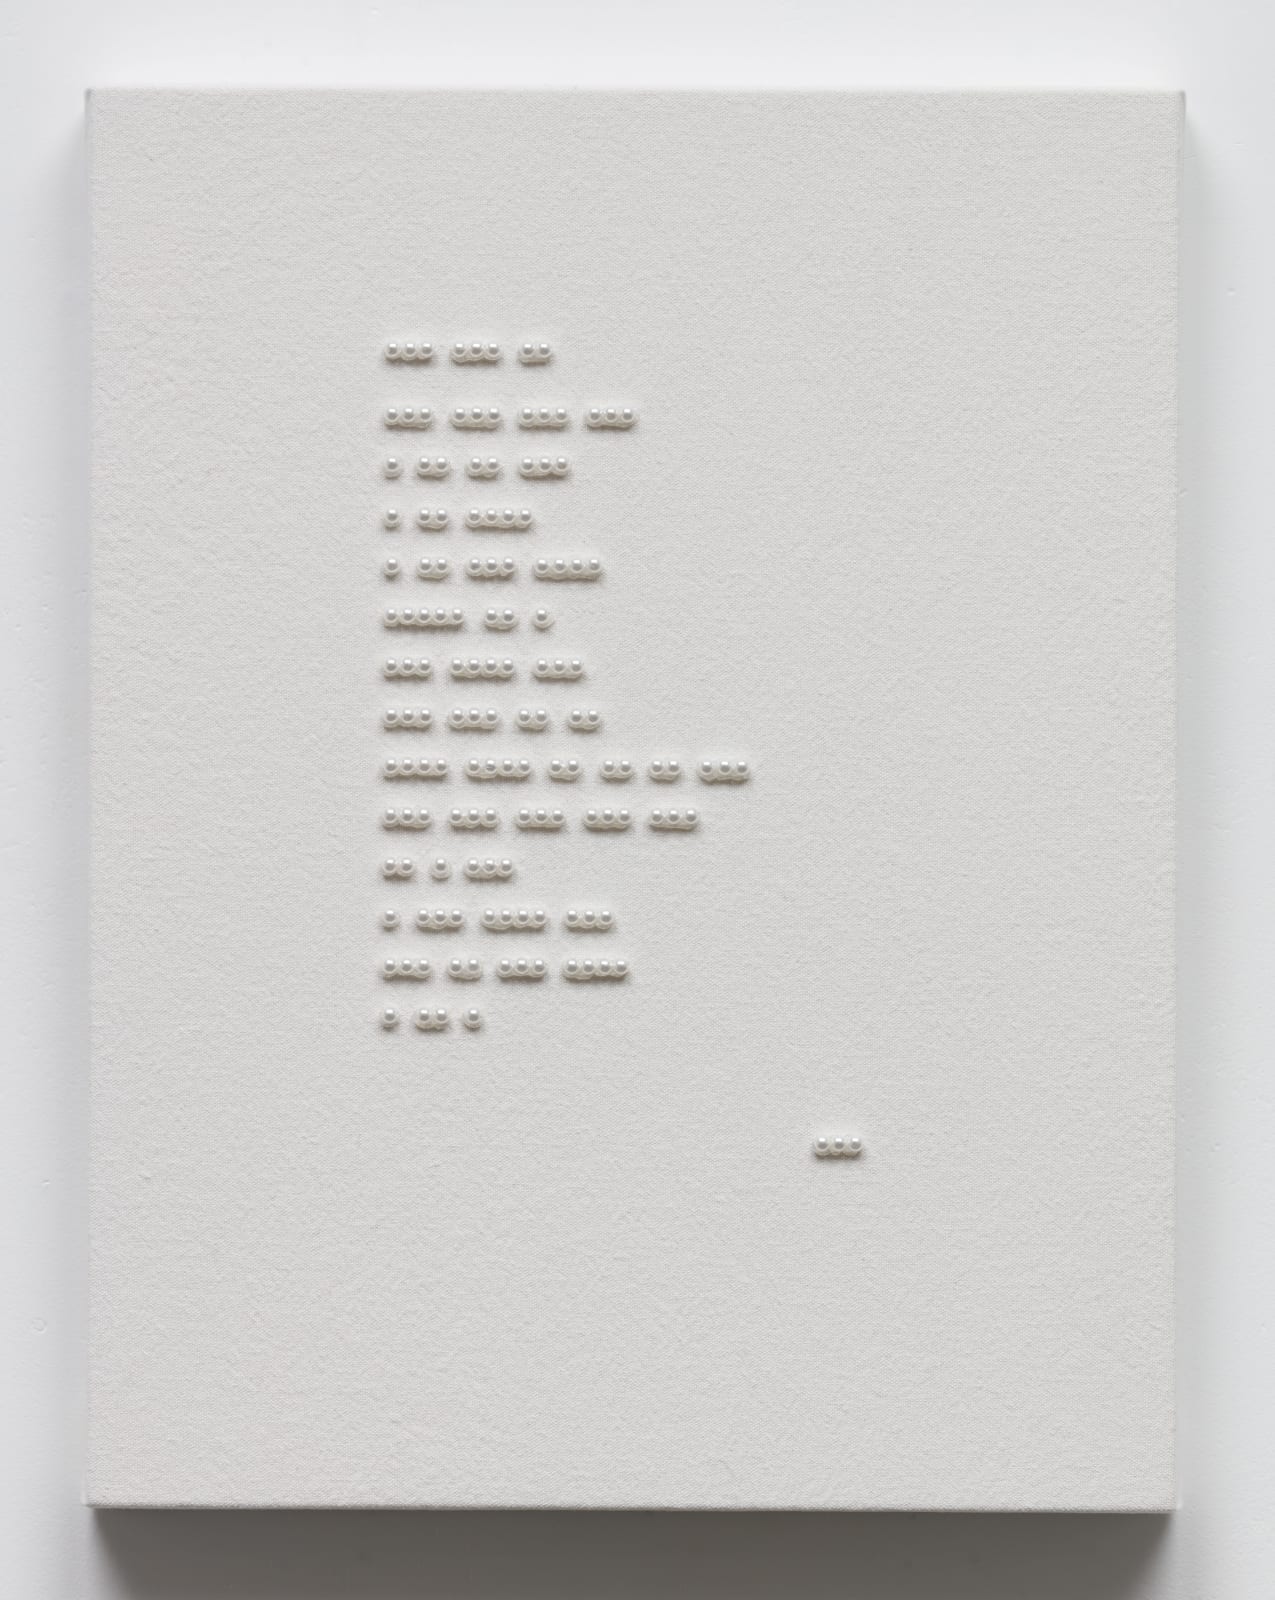 Koh San Keum A Small Love Song Poem Of Hwang Tong Gyu 19 갤러리바톤 Gallery Baton